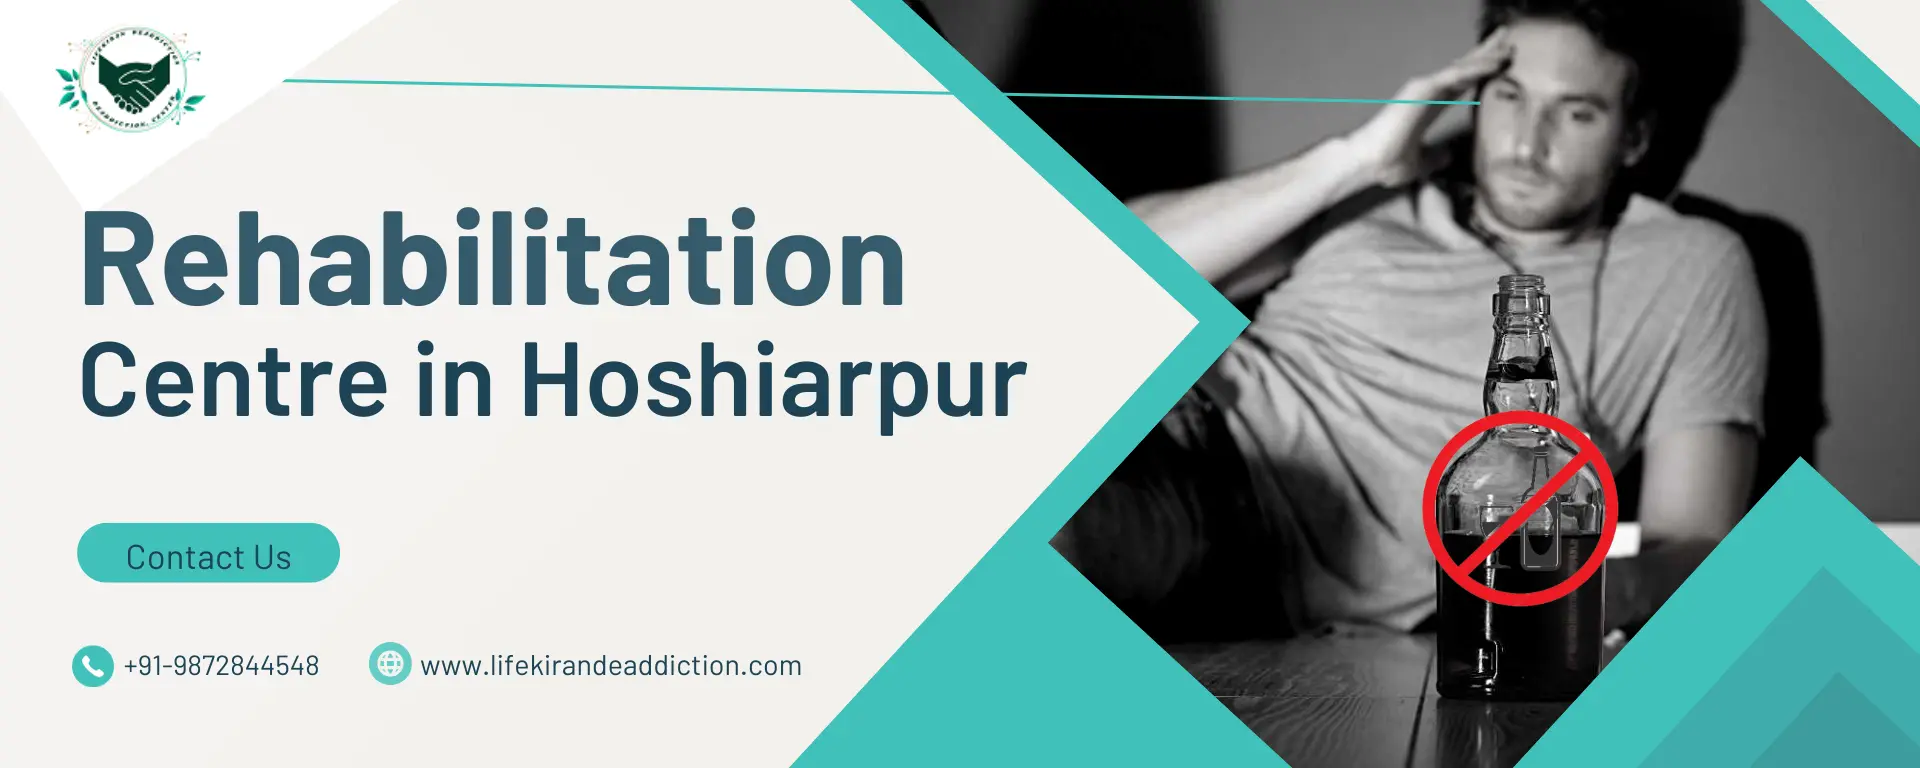 Rehabilitation Centre In Hoshiarpur